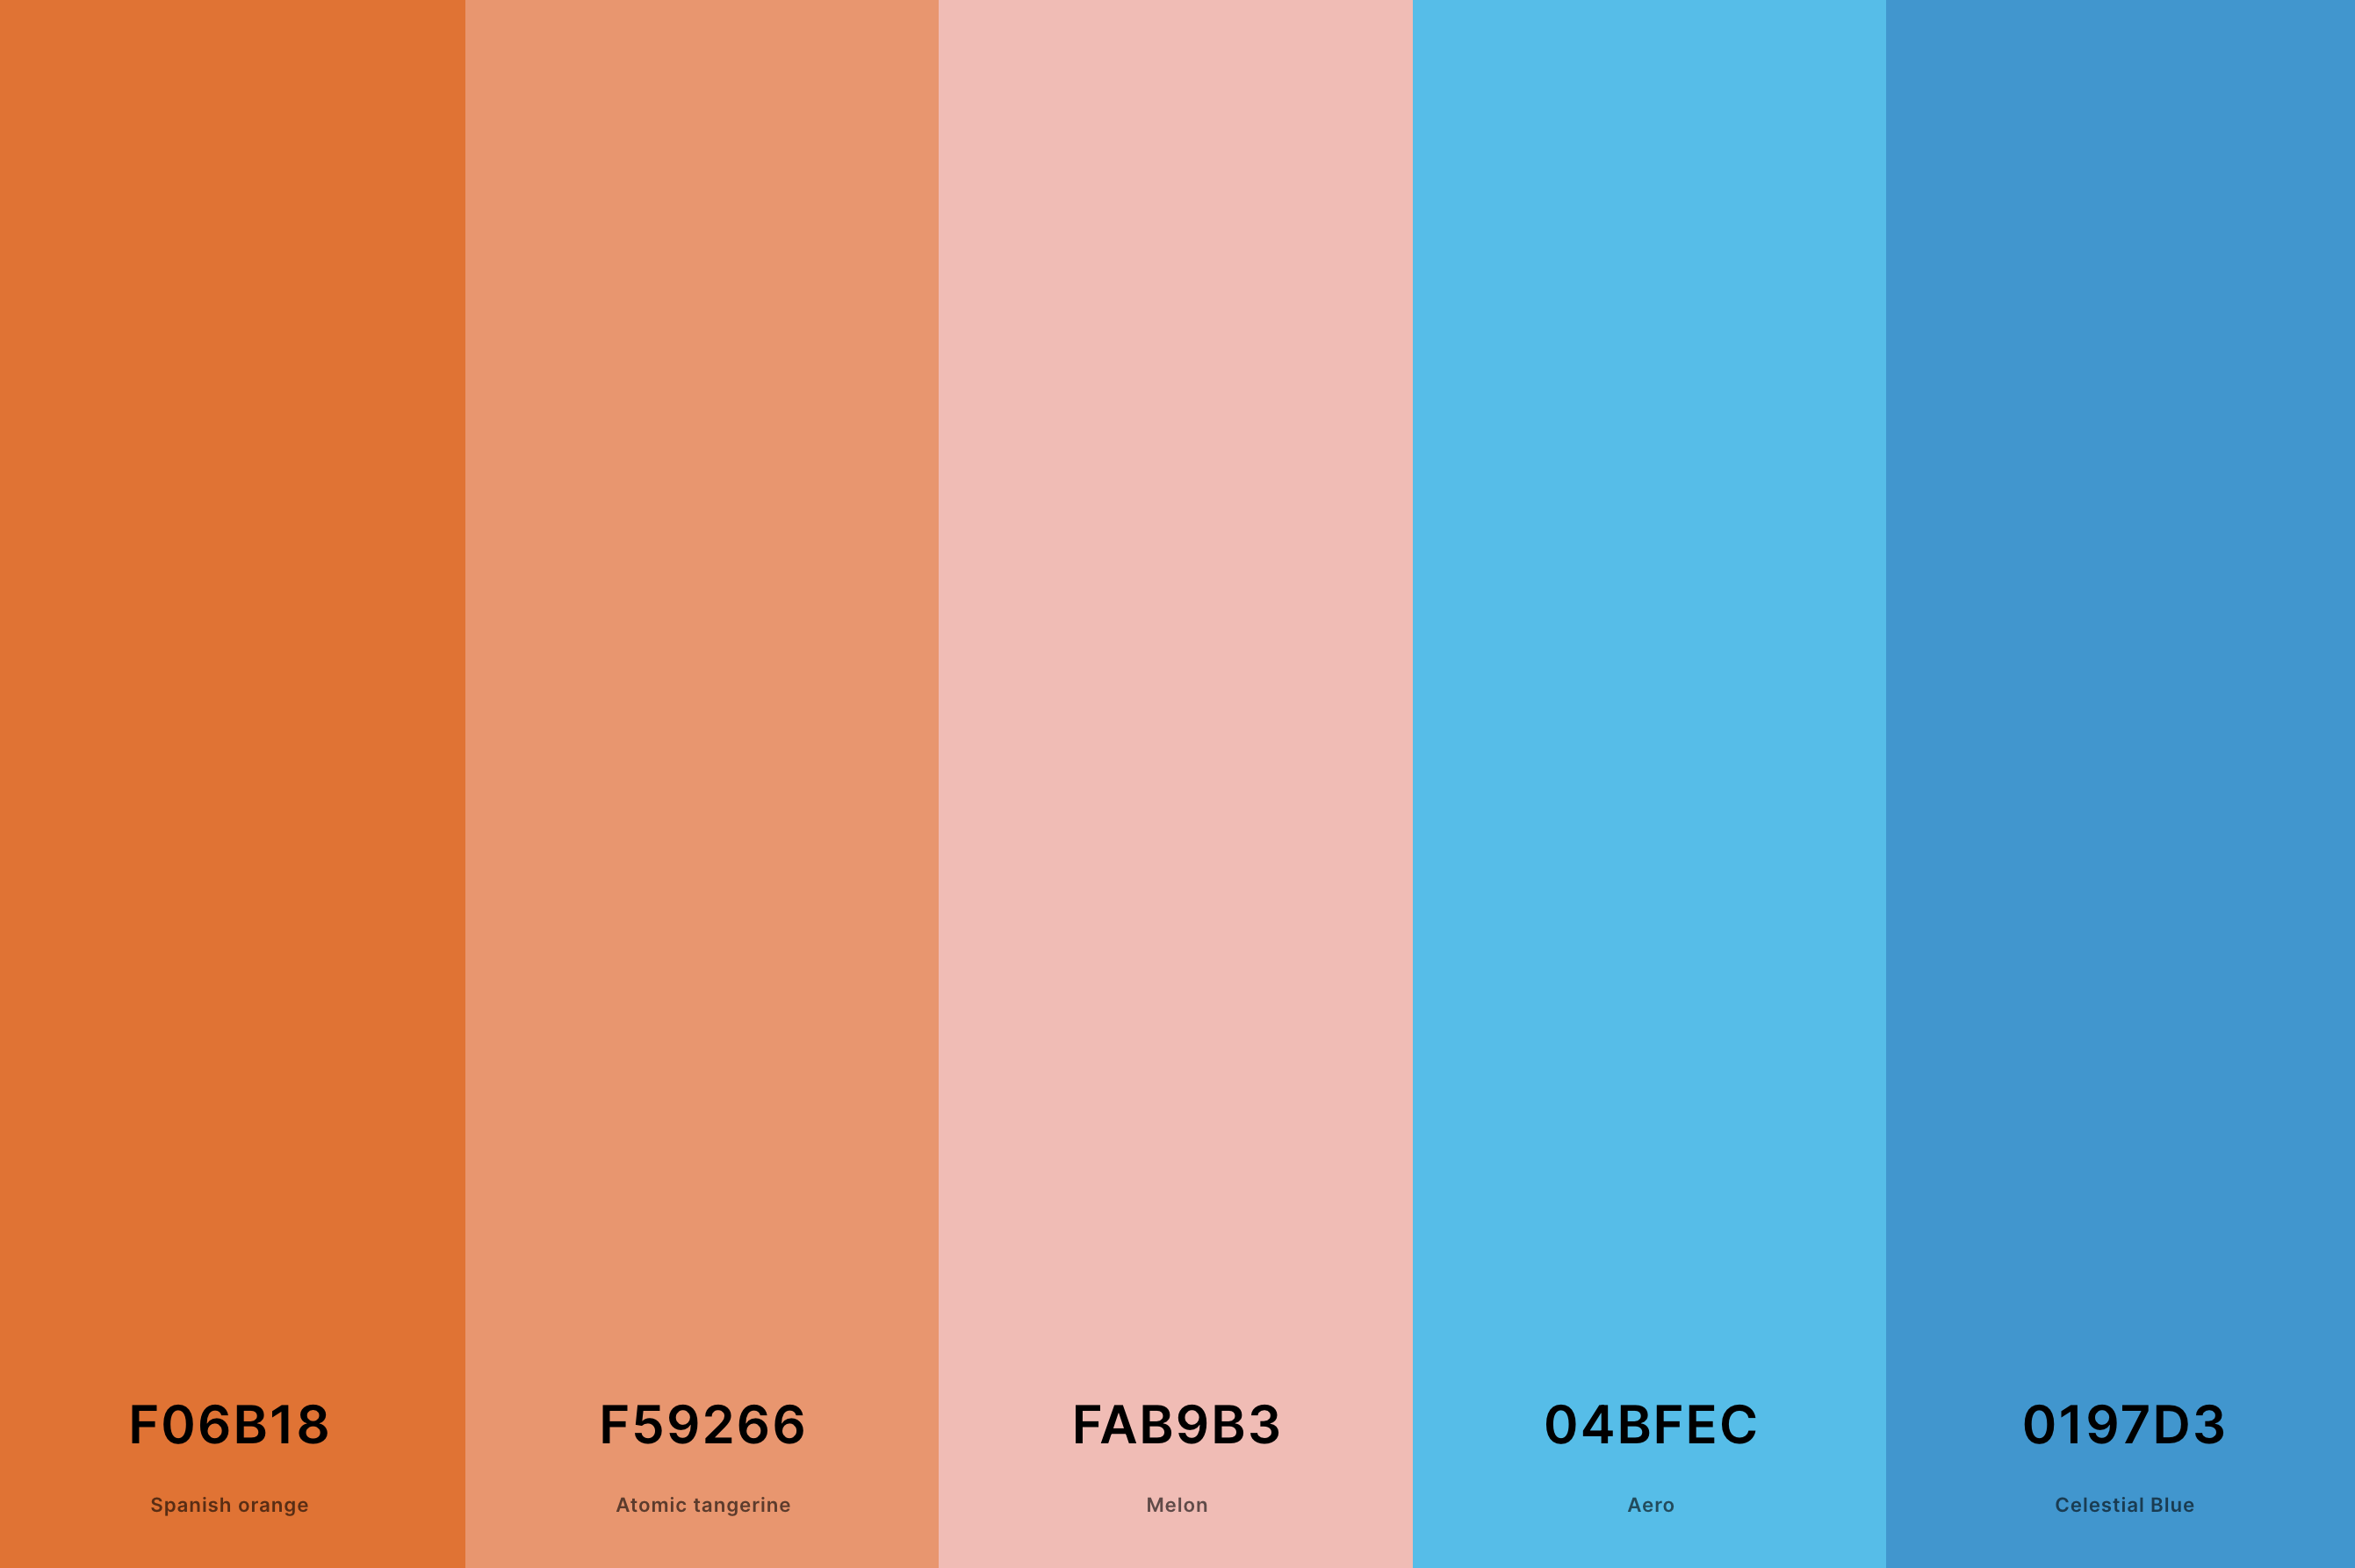 1. Coral Reef Color Palette Color Palette with Spanish Orange (Hex #F06B18) + Atomic Tangerine (Hex #F59266) + Melon (Hex #FAB9B3) + Aero (Hex #04BFEC) + Celestial Blue (Hex #0197D3) Color Palette with Hex Codes